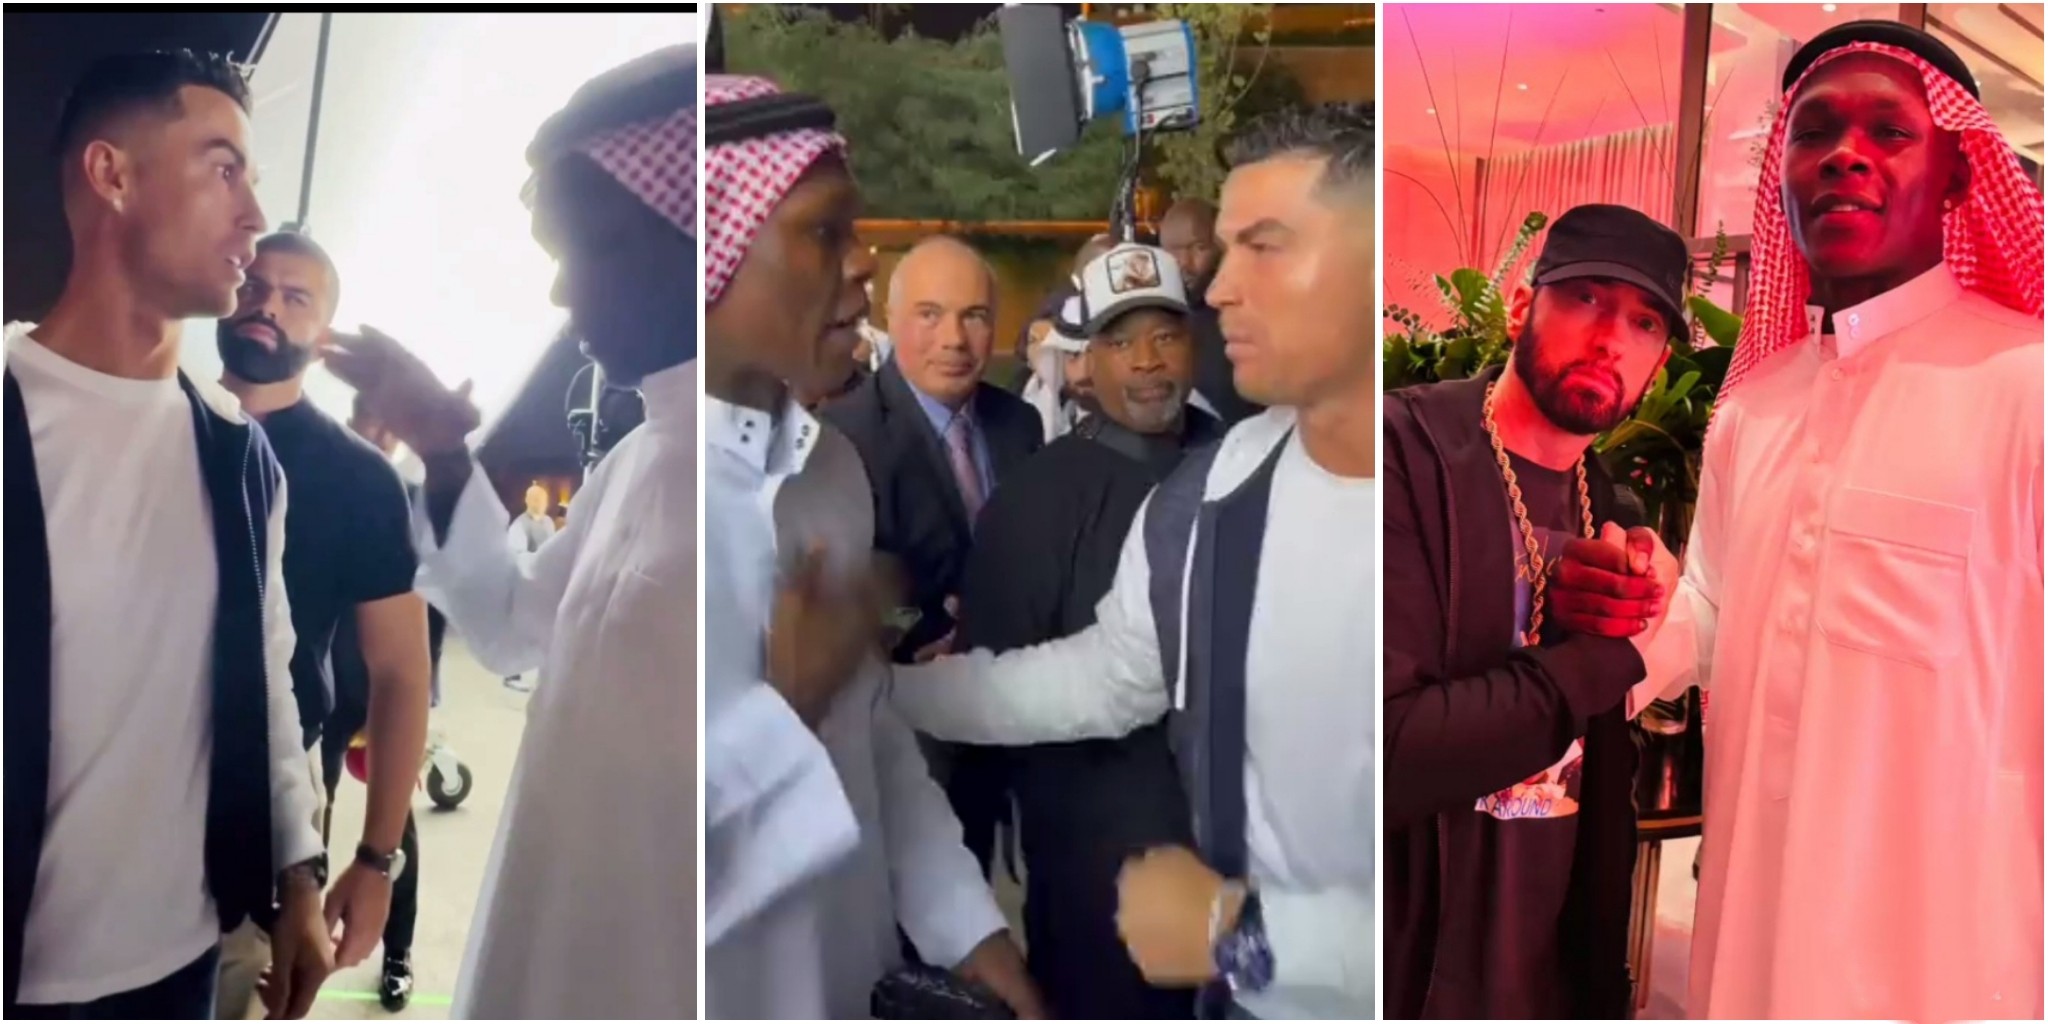 Israel Adesanya ecstatic as he meets Ronaldo and Messi at Tyson Fury’s boxing bout in Saudi Arabia